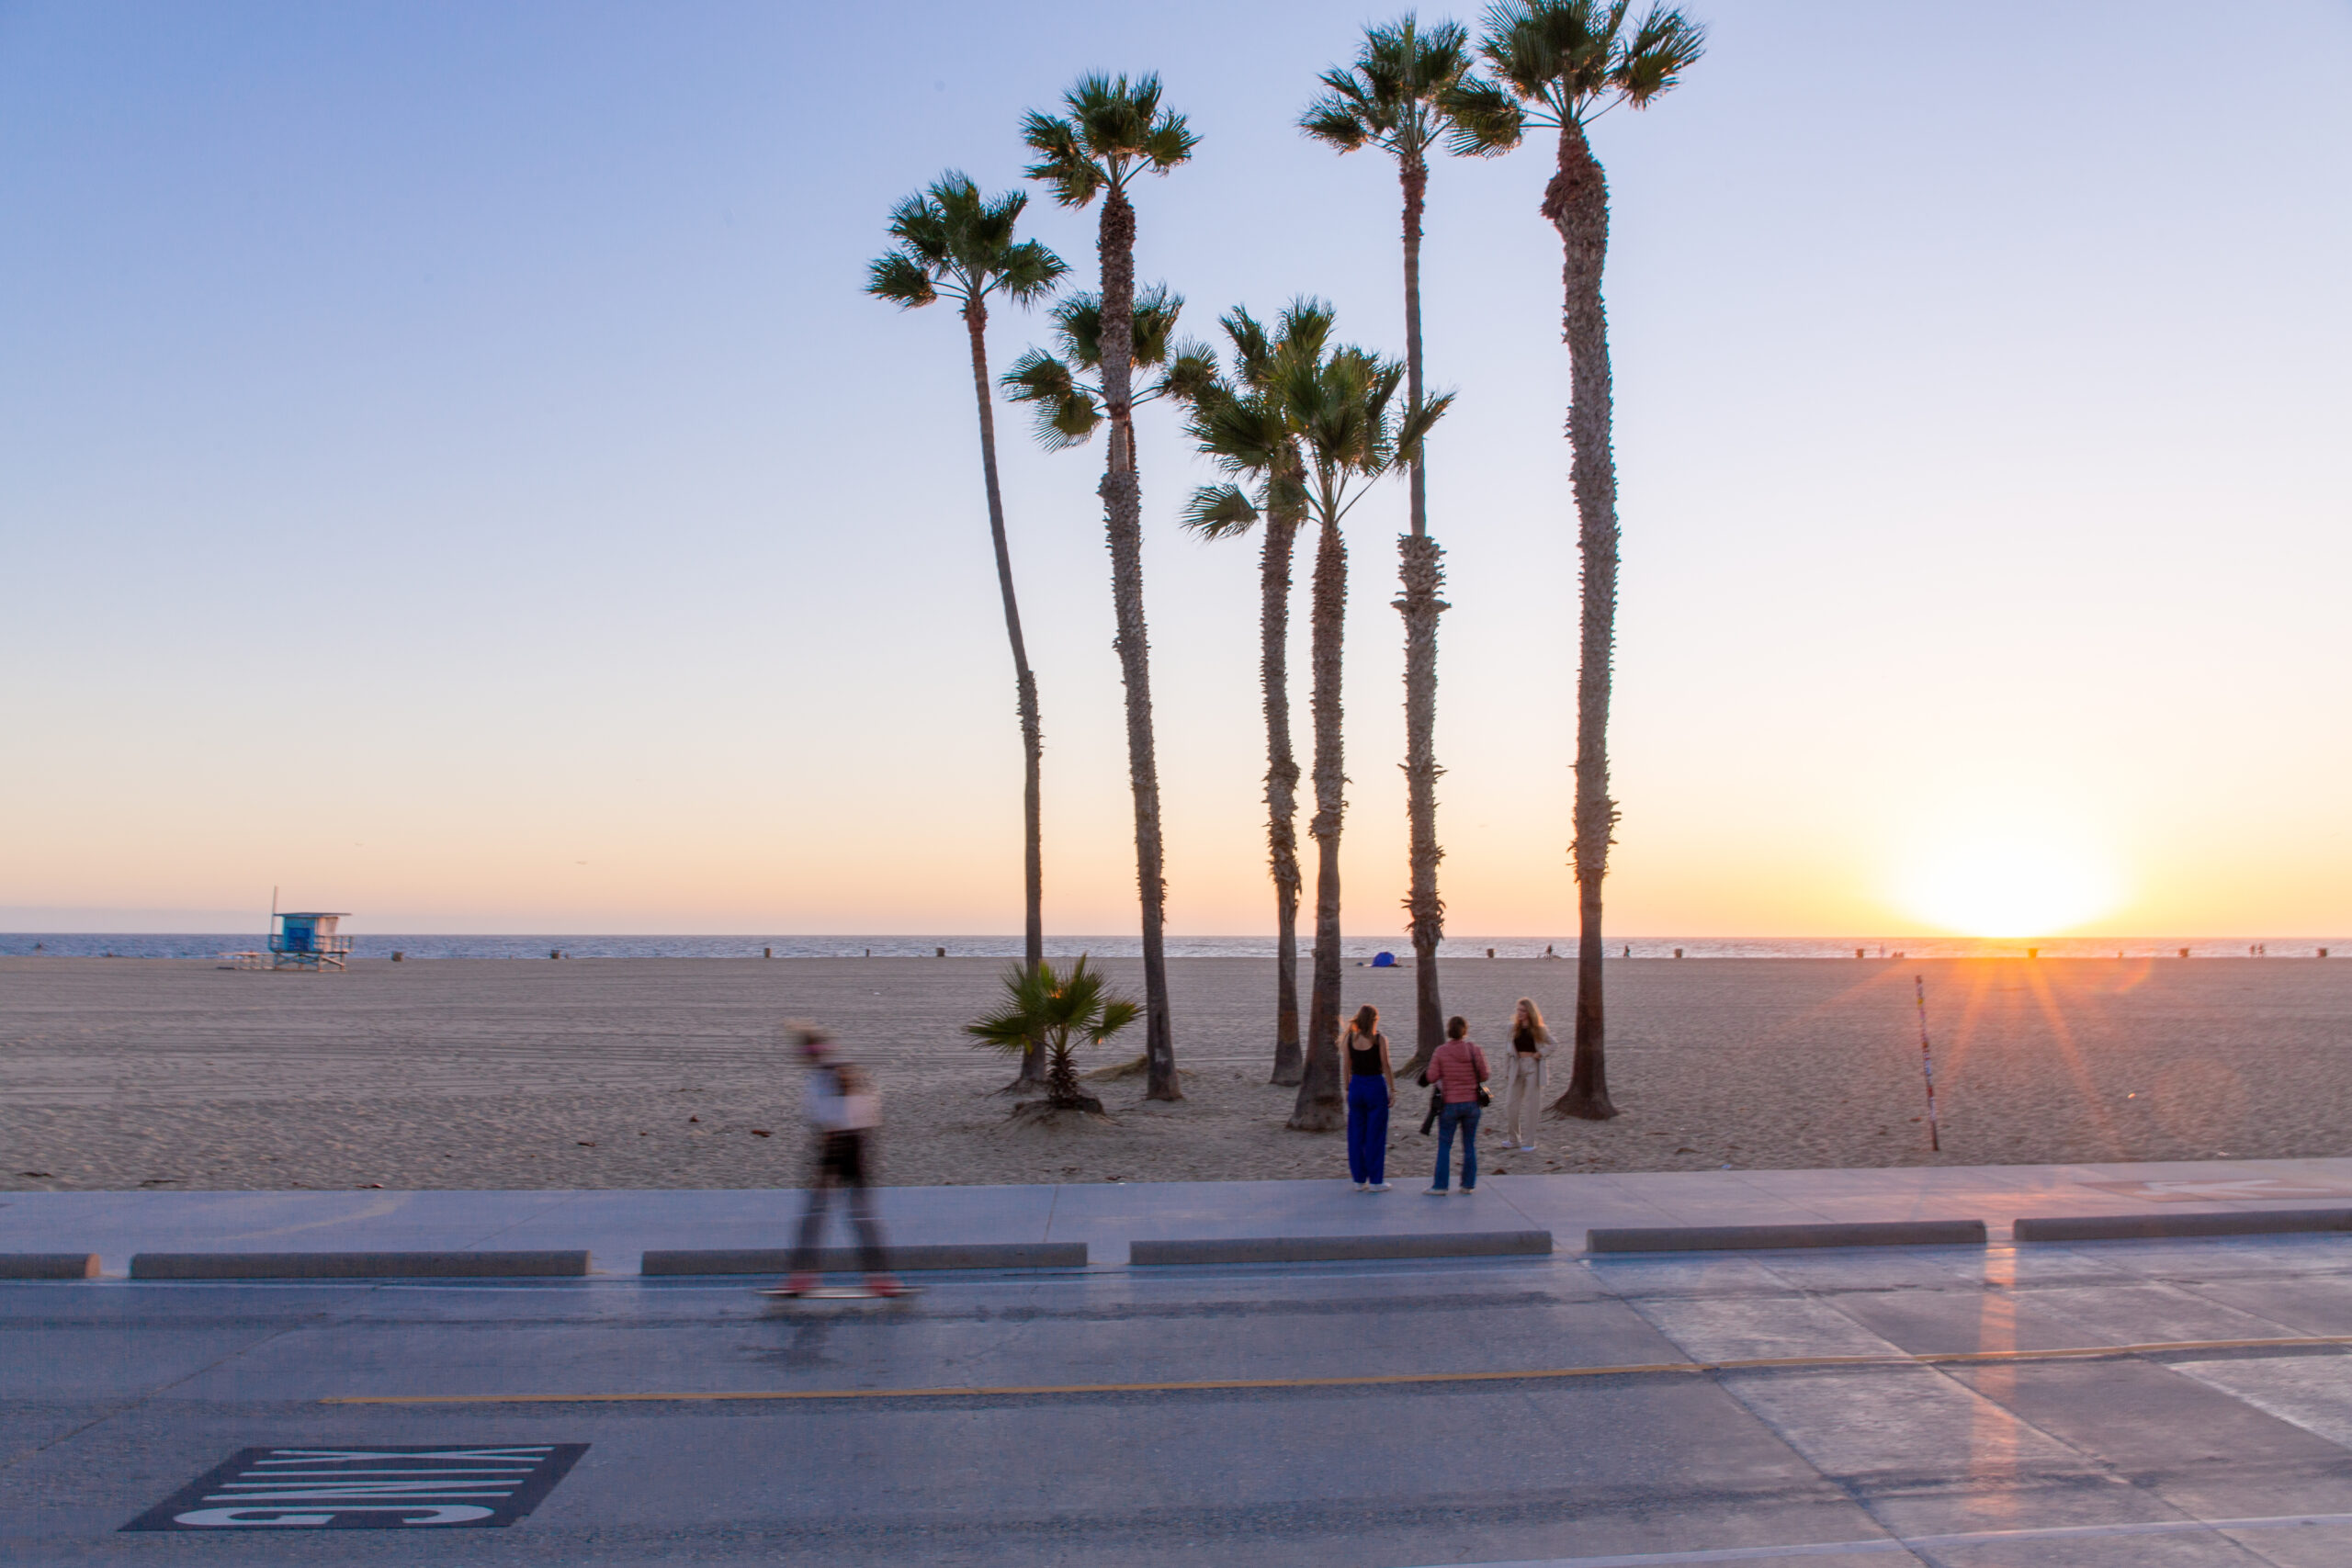 A boardwalk in Los Angeles at dusk.